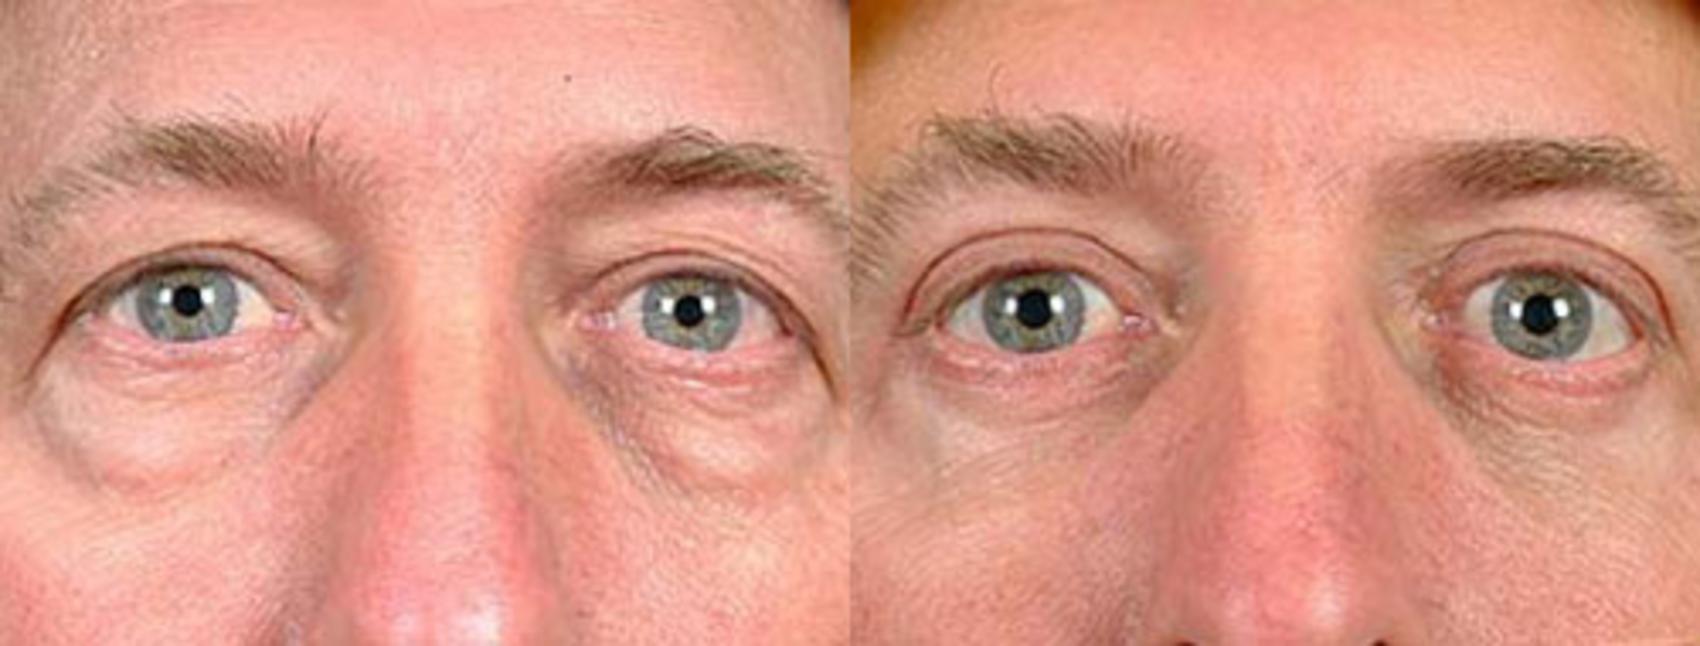 Eyelid Surgery Case 89 Before & After View #1 | Louisville, KY | CaloSpa® Rejuvenation Center